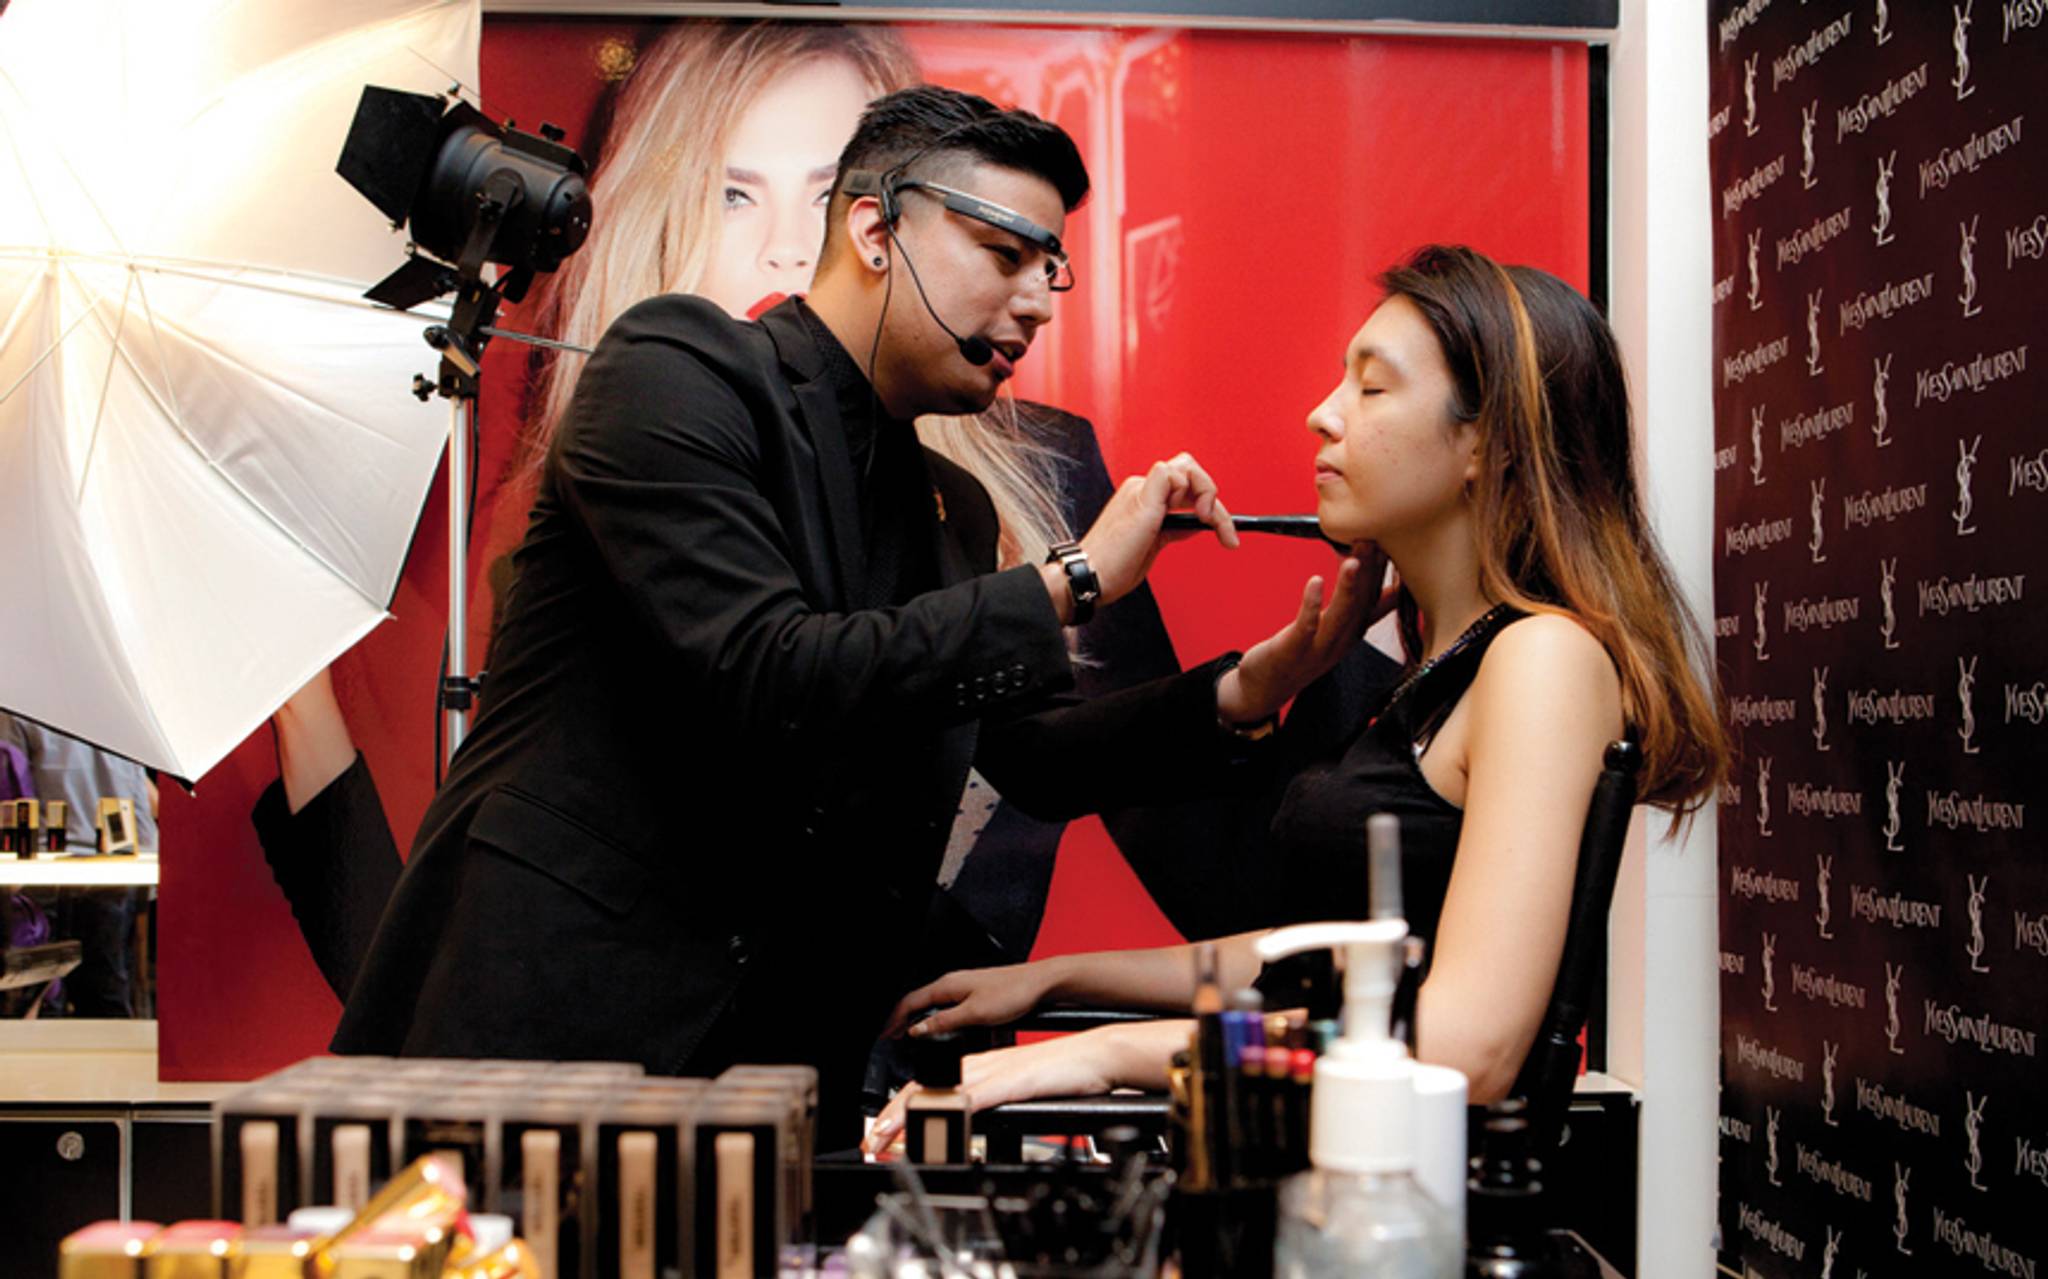 Google Glass makeup tutorials from YSL